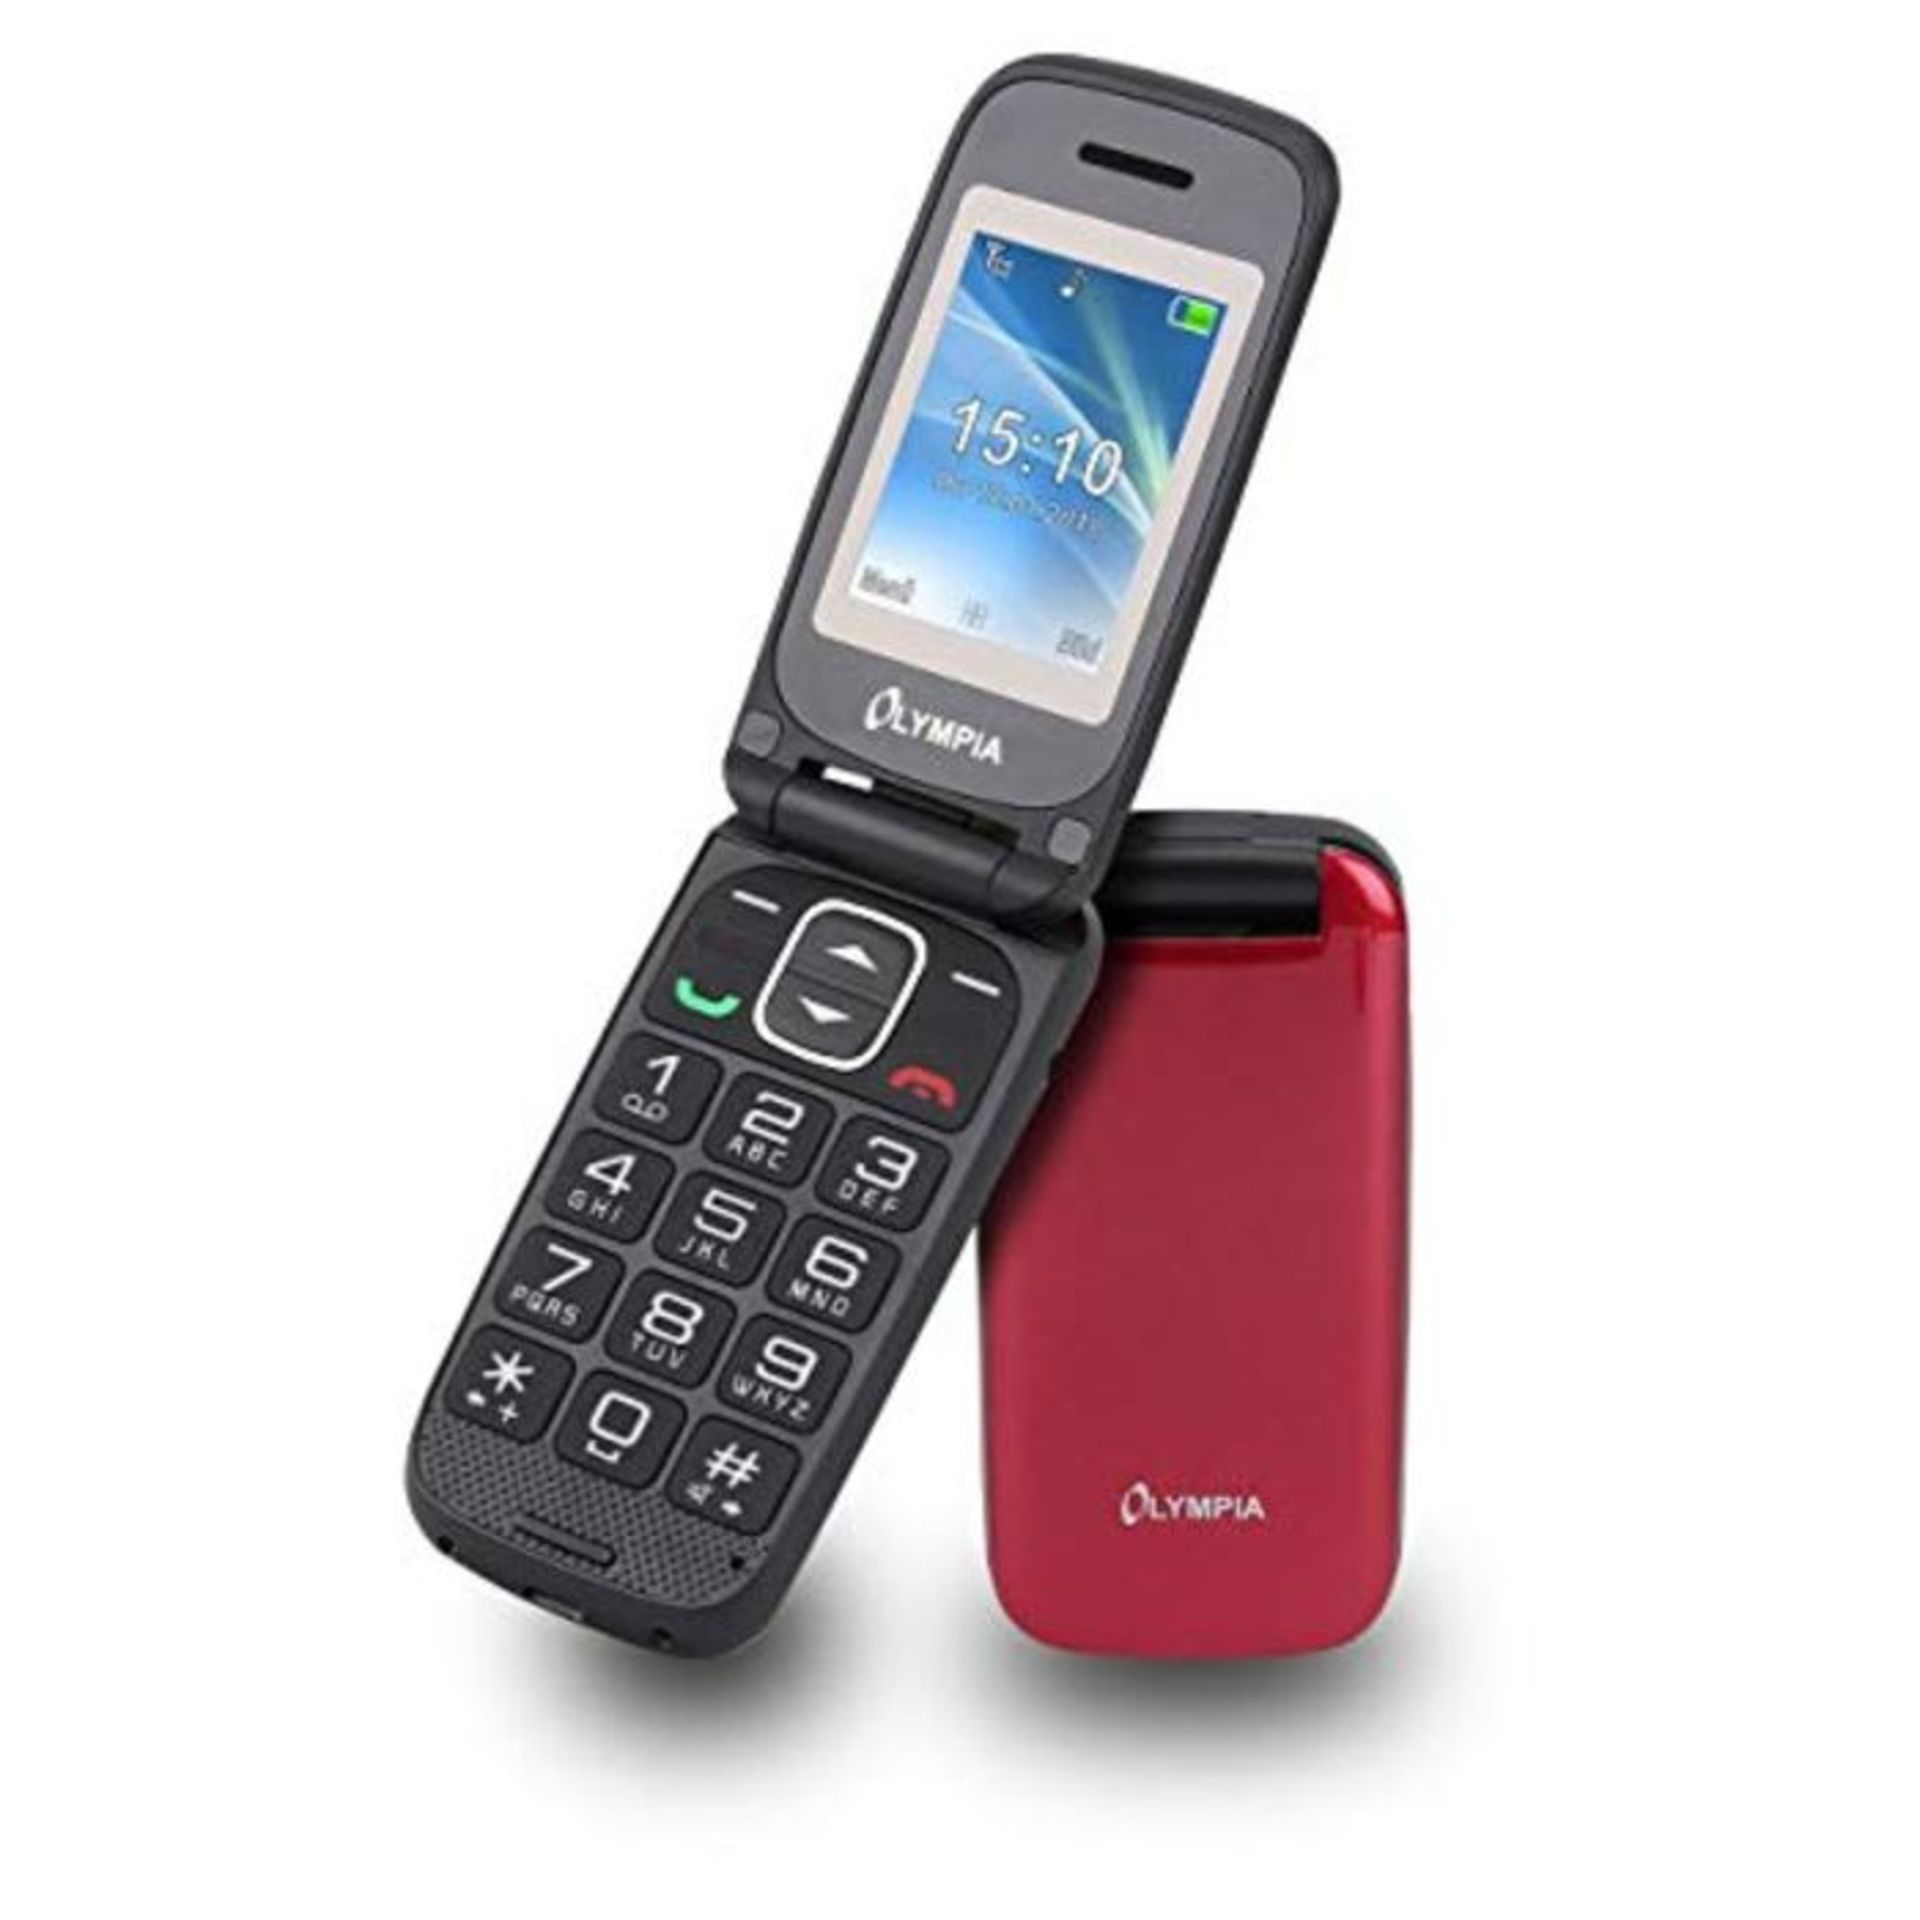 Olympia 2250 Classic Mini II Mobiltelefon Seniorenhandy Notruf (SOS) Taste groÃxe W?